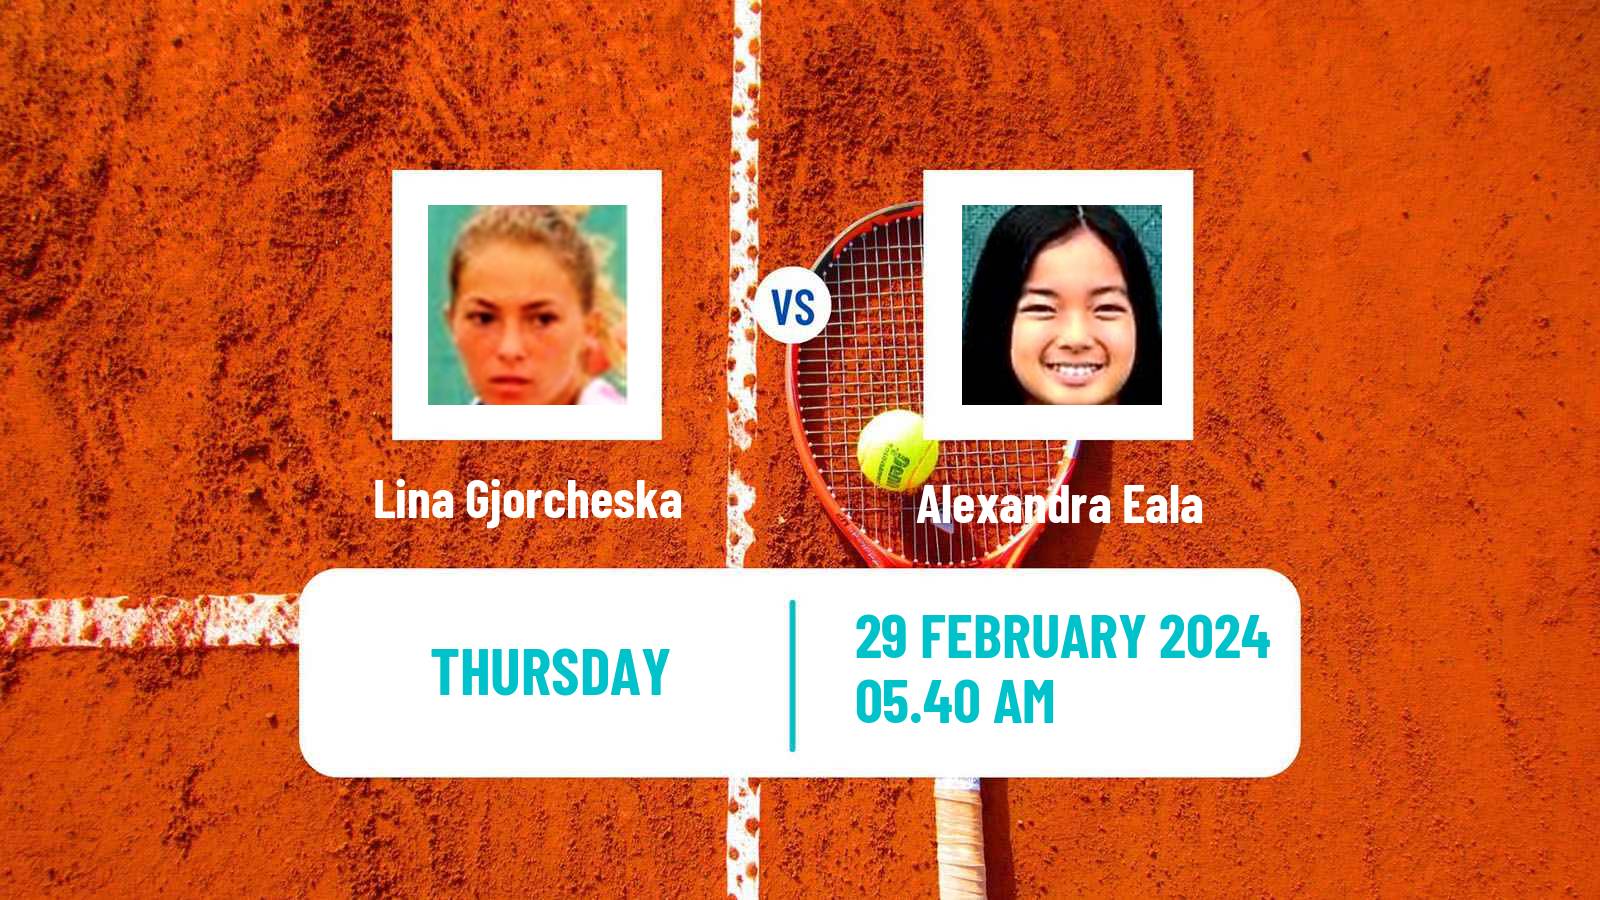 Tennis ITF W50 Trnava Women Lina Gjorcheska - Alexandra Eala